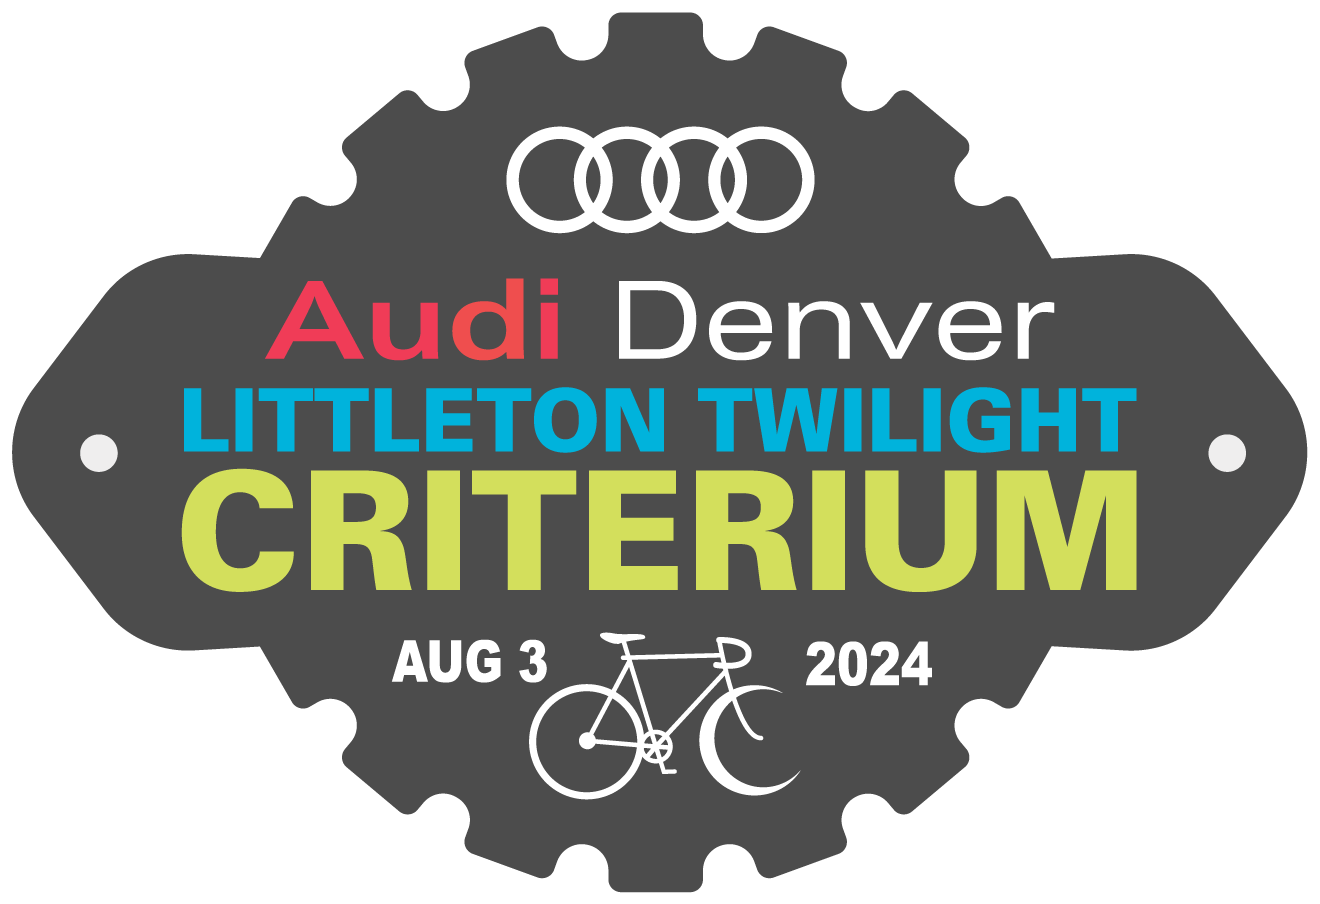 Audi Denver Littleton Twilight Criterium logo - color logo